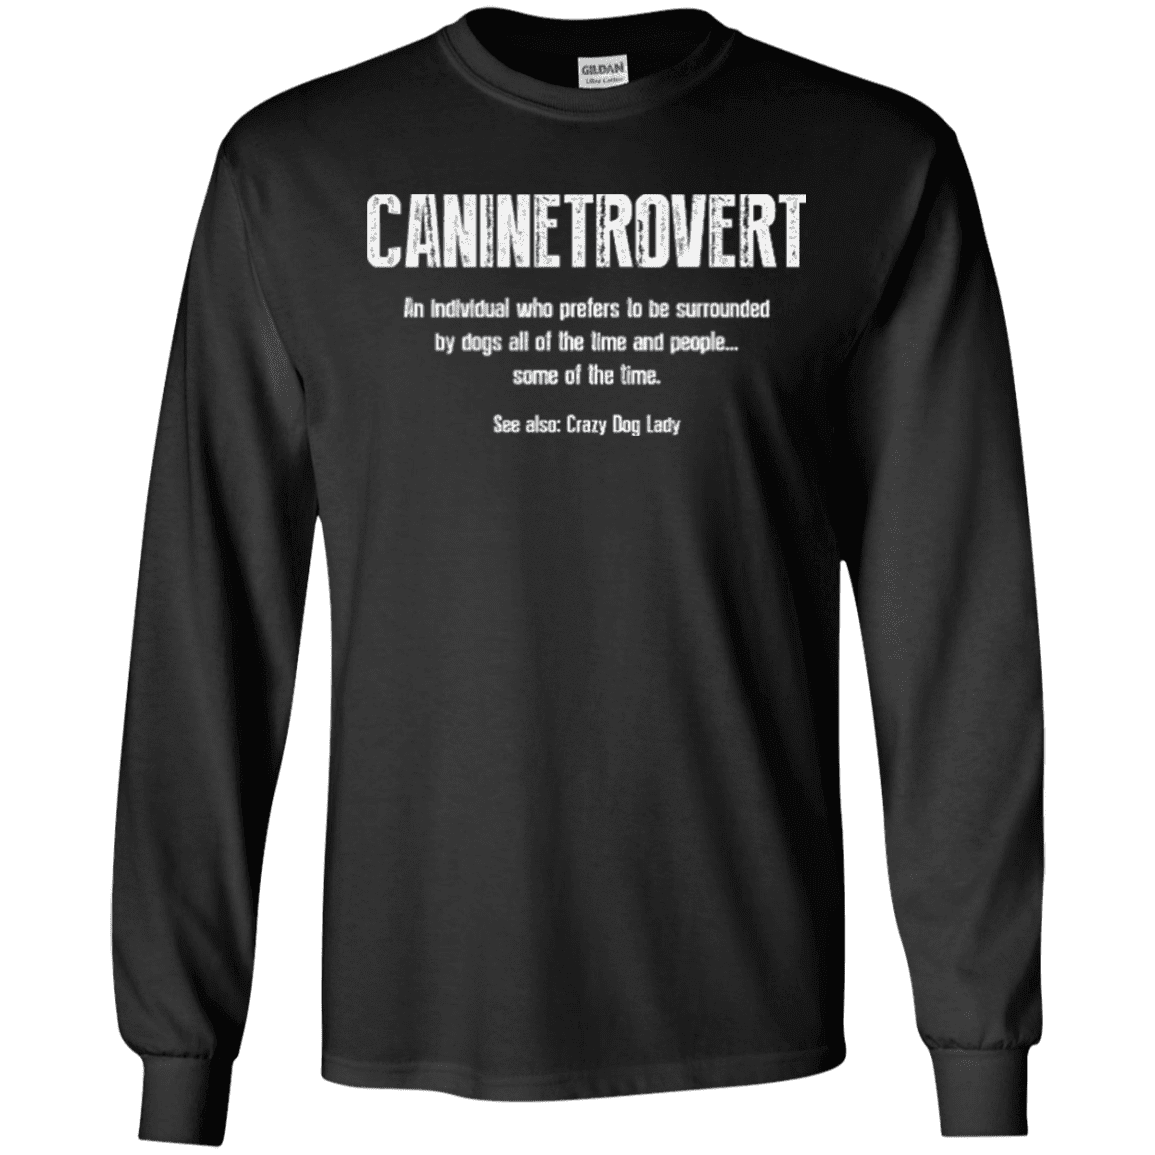 Caninetrovert - Long Sleeve T Shirt.